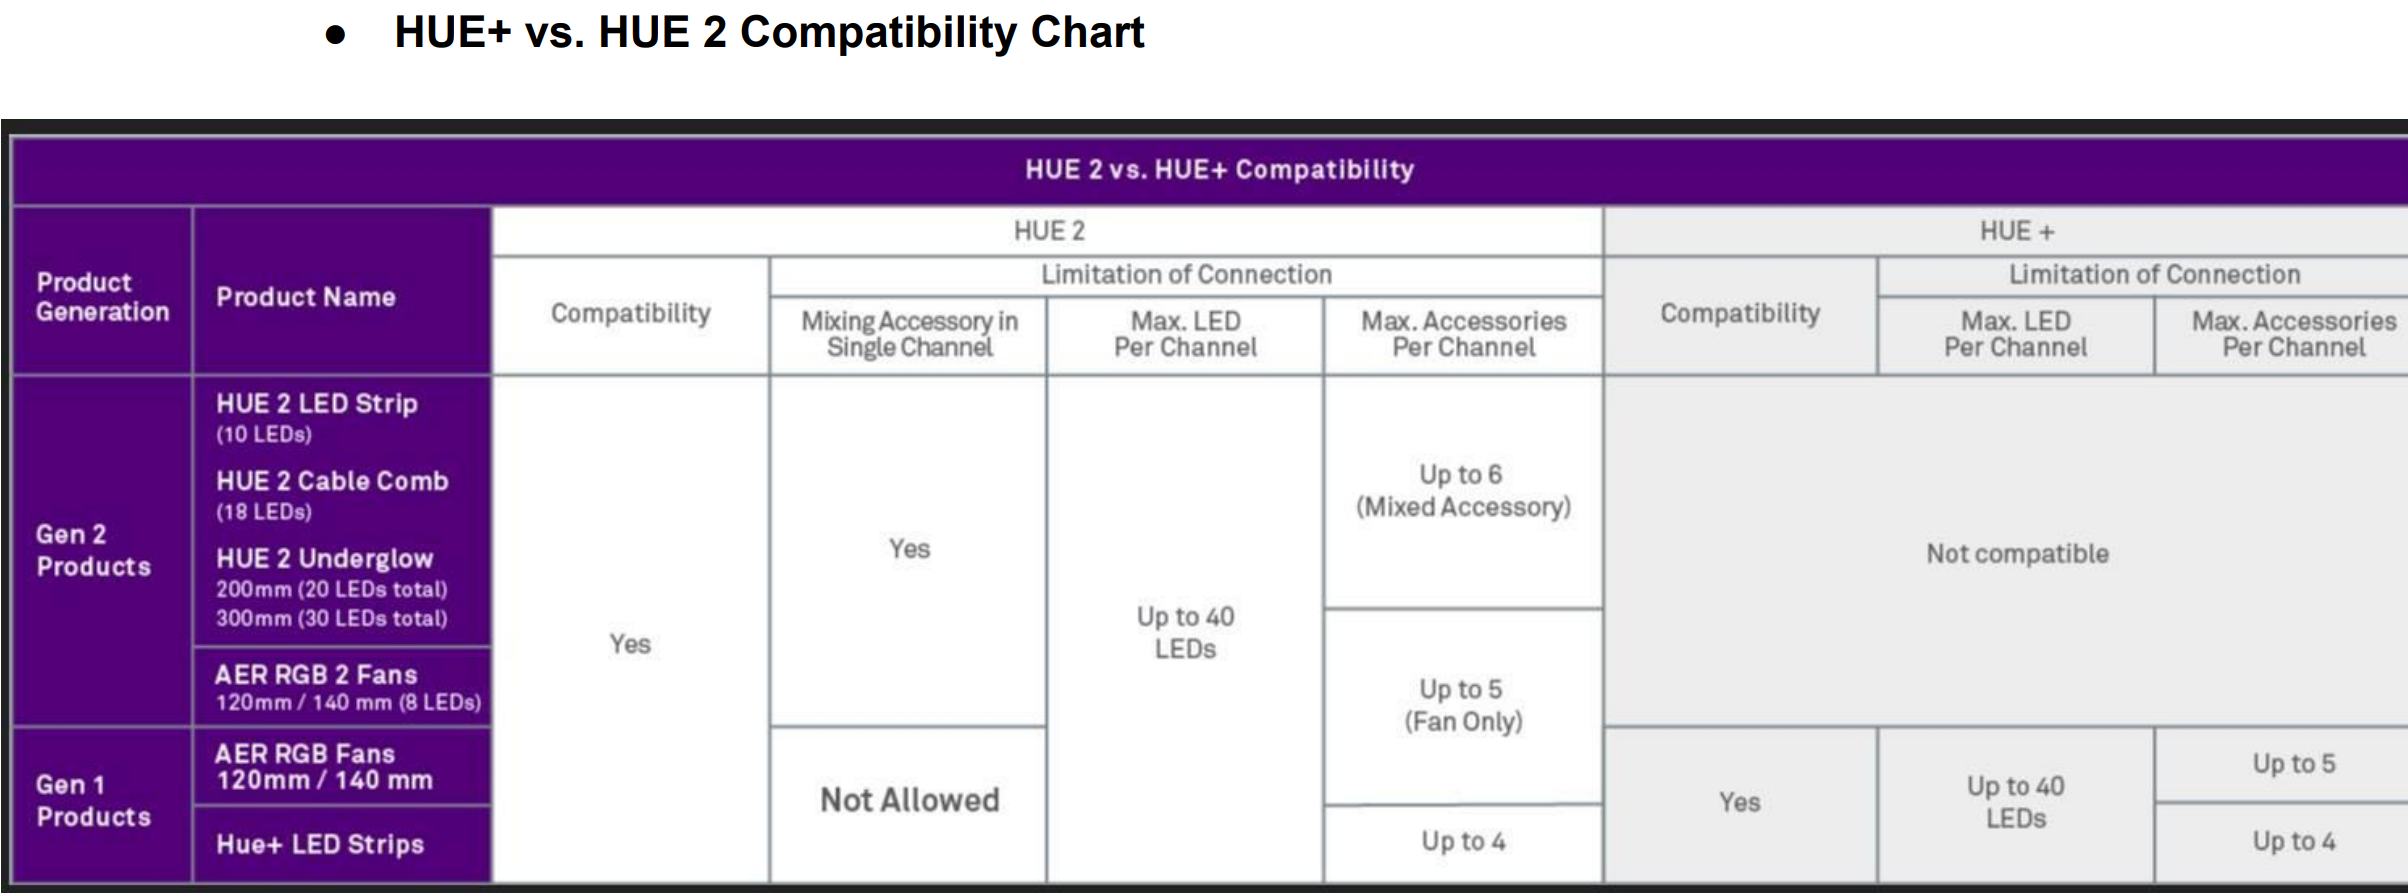 HUE 2 Compatibility Chart